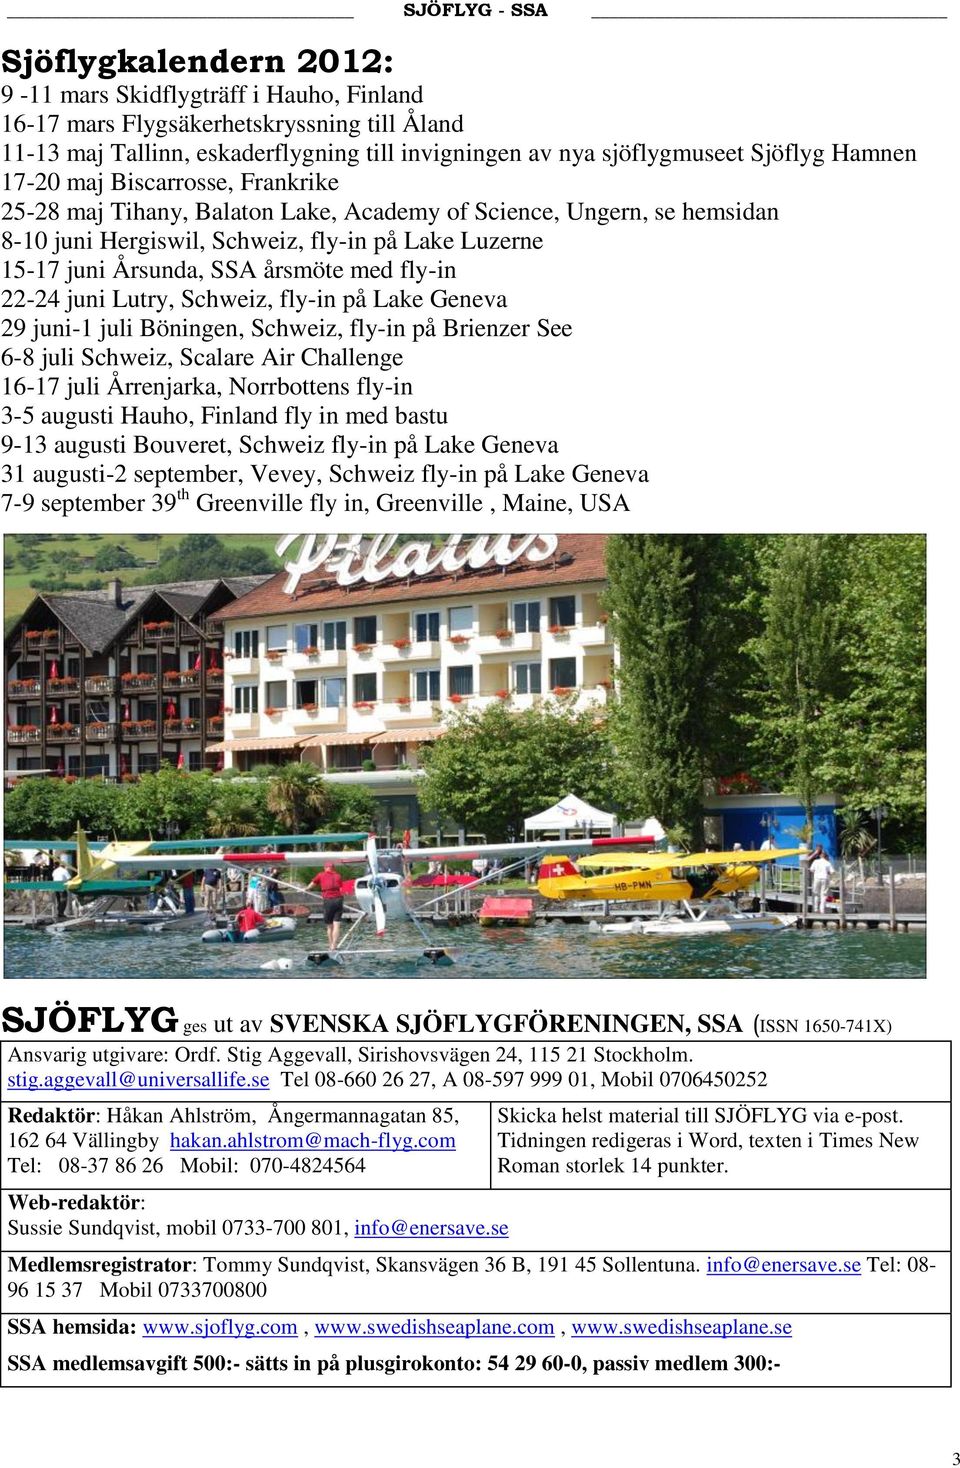 fly-in 22-24 juni Lutry, Schweiz, fly-in på Lake Geneva 29 juni-1 juli Böningen, Schweiz, fly-in på Brienzer See 6-8 juli Schweiz, Scalare Air Challenge 16-17 juli Årrenjarka, Norrbottens fly-in 3-5